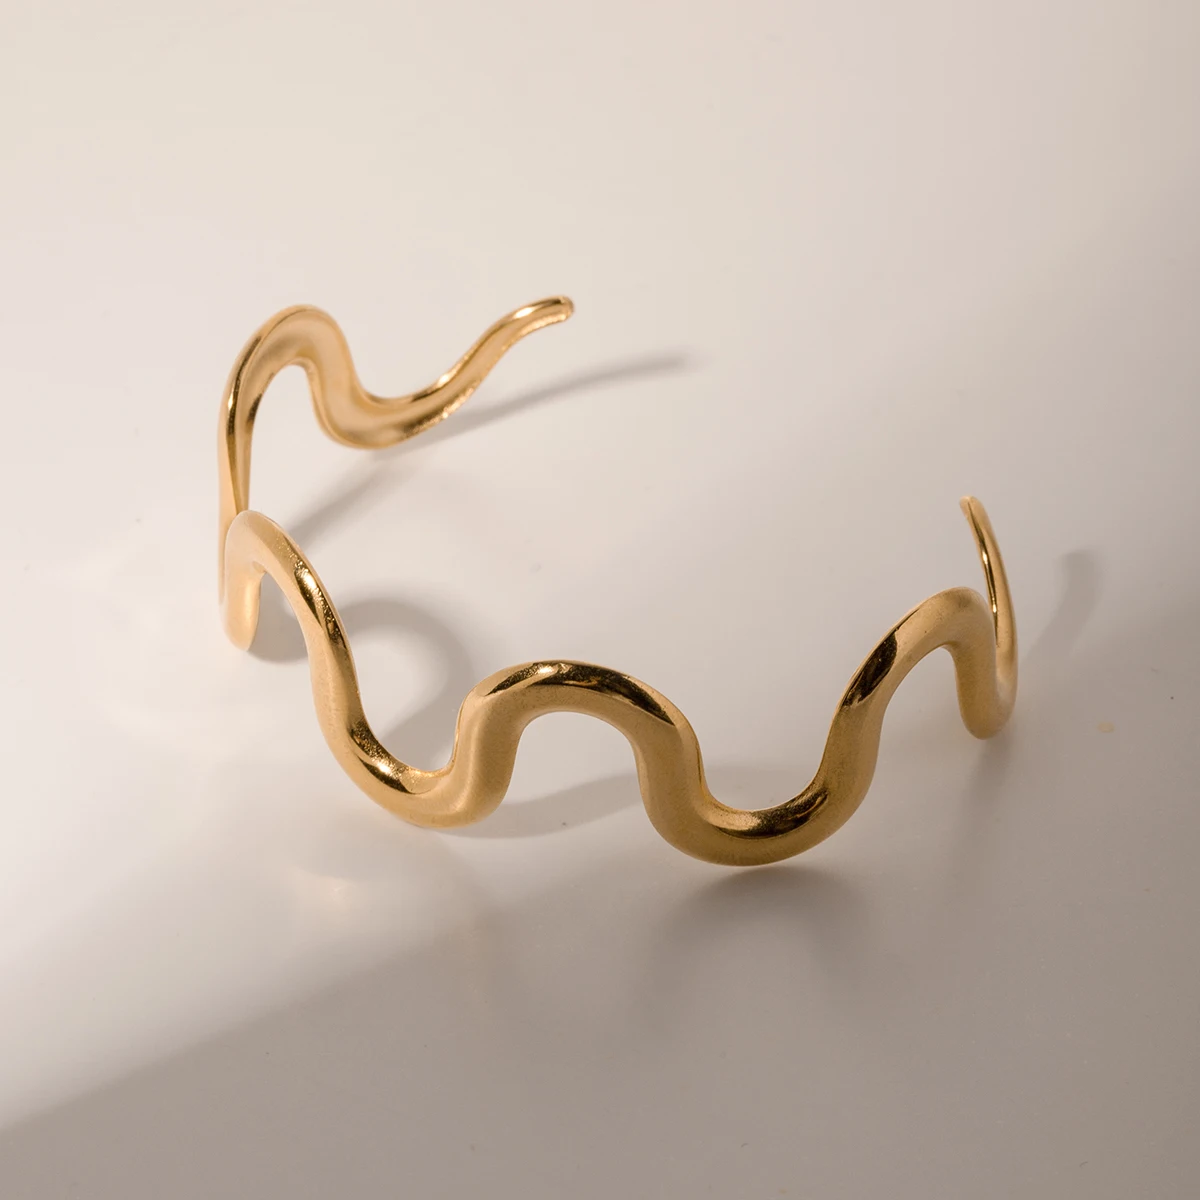 J&d Jewelry 18k Gold Plated Wave Bracelets Gift Stainless Steel Twist ...